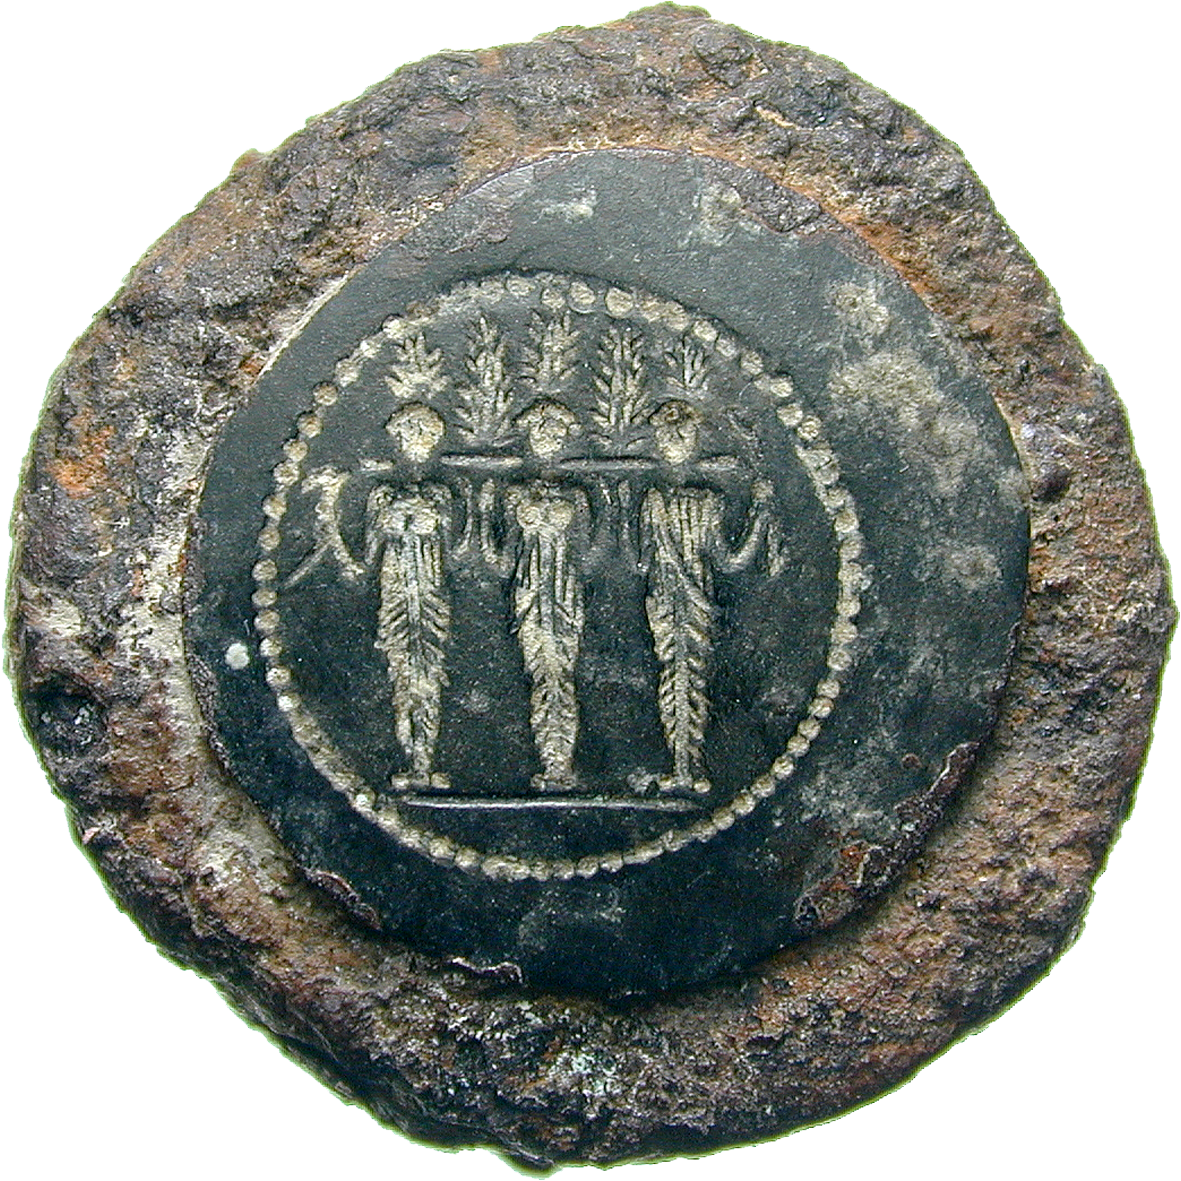 Roman Republic, Coin Die for the Reverse of a Denarius (obverse)